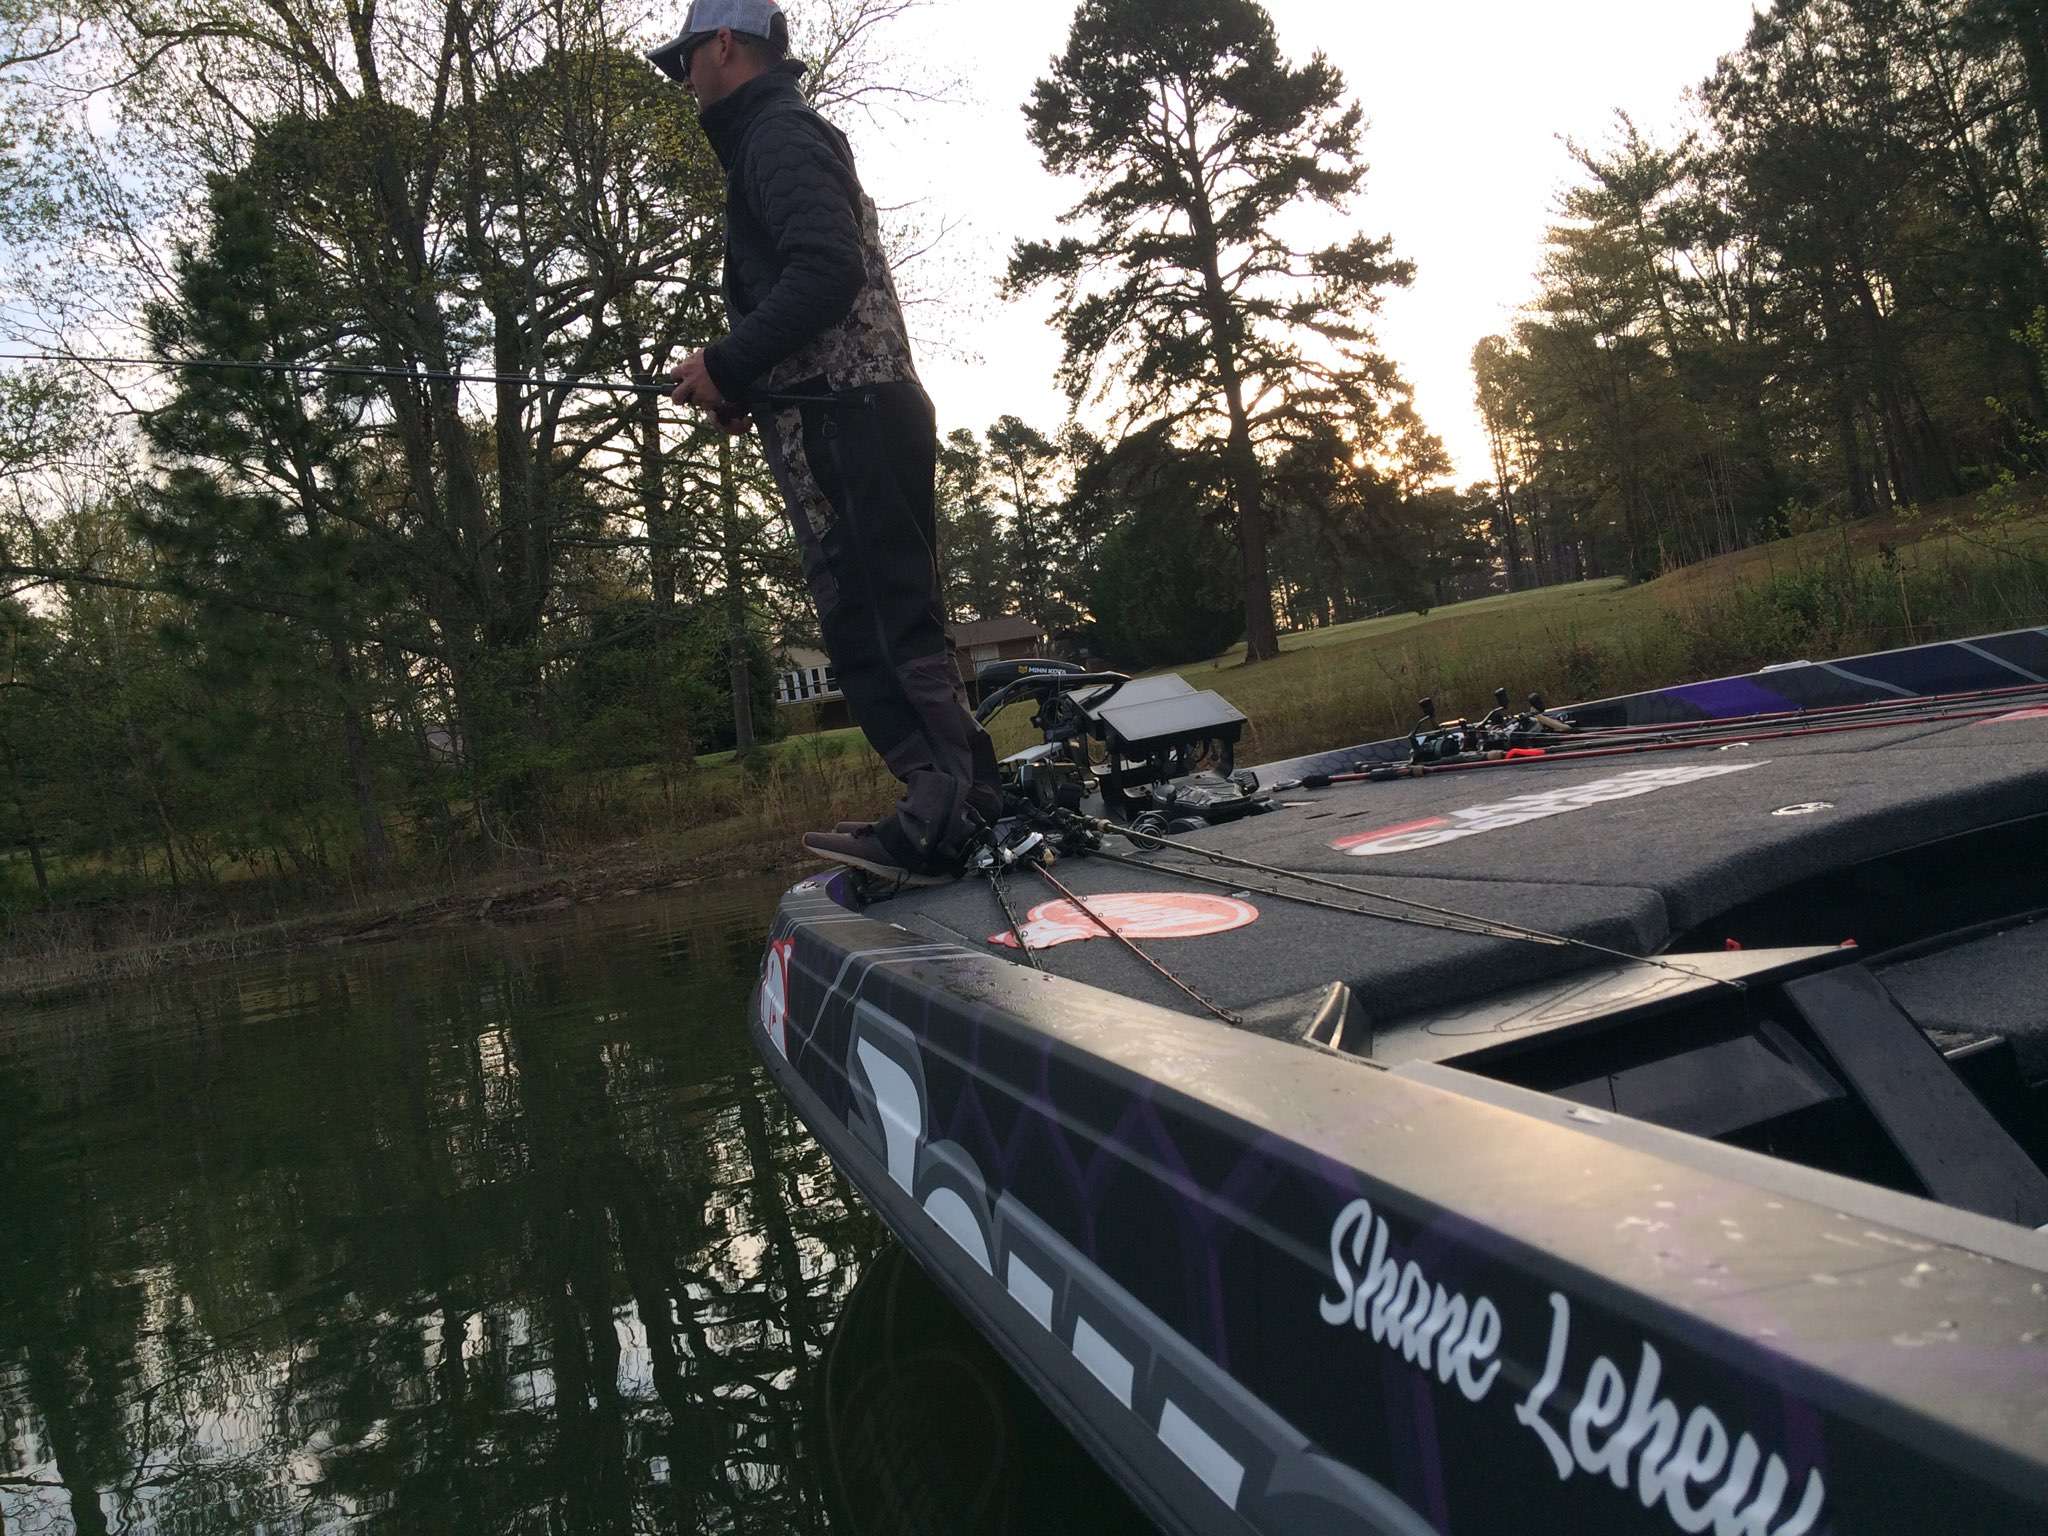 Shane Lehew starts his day sight fishing.